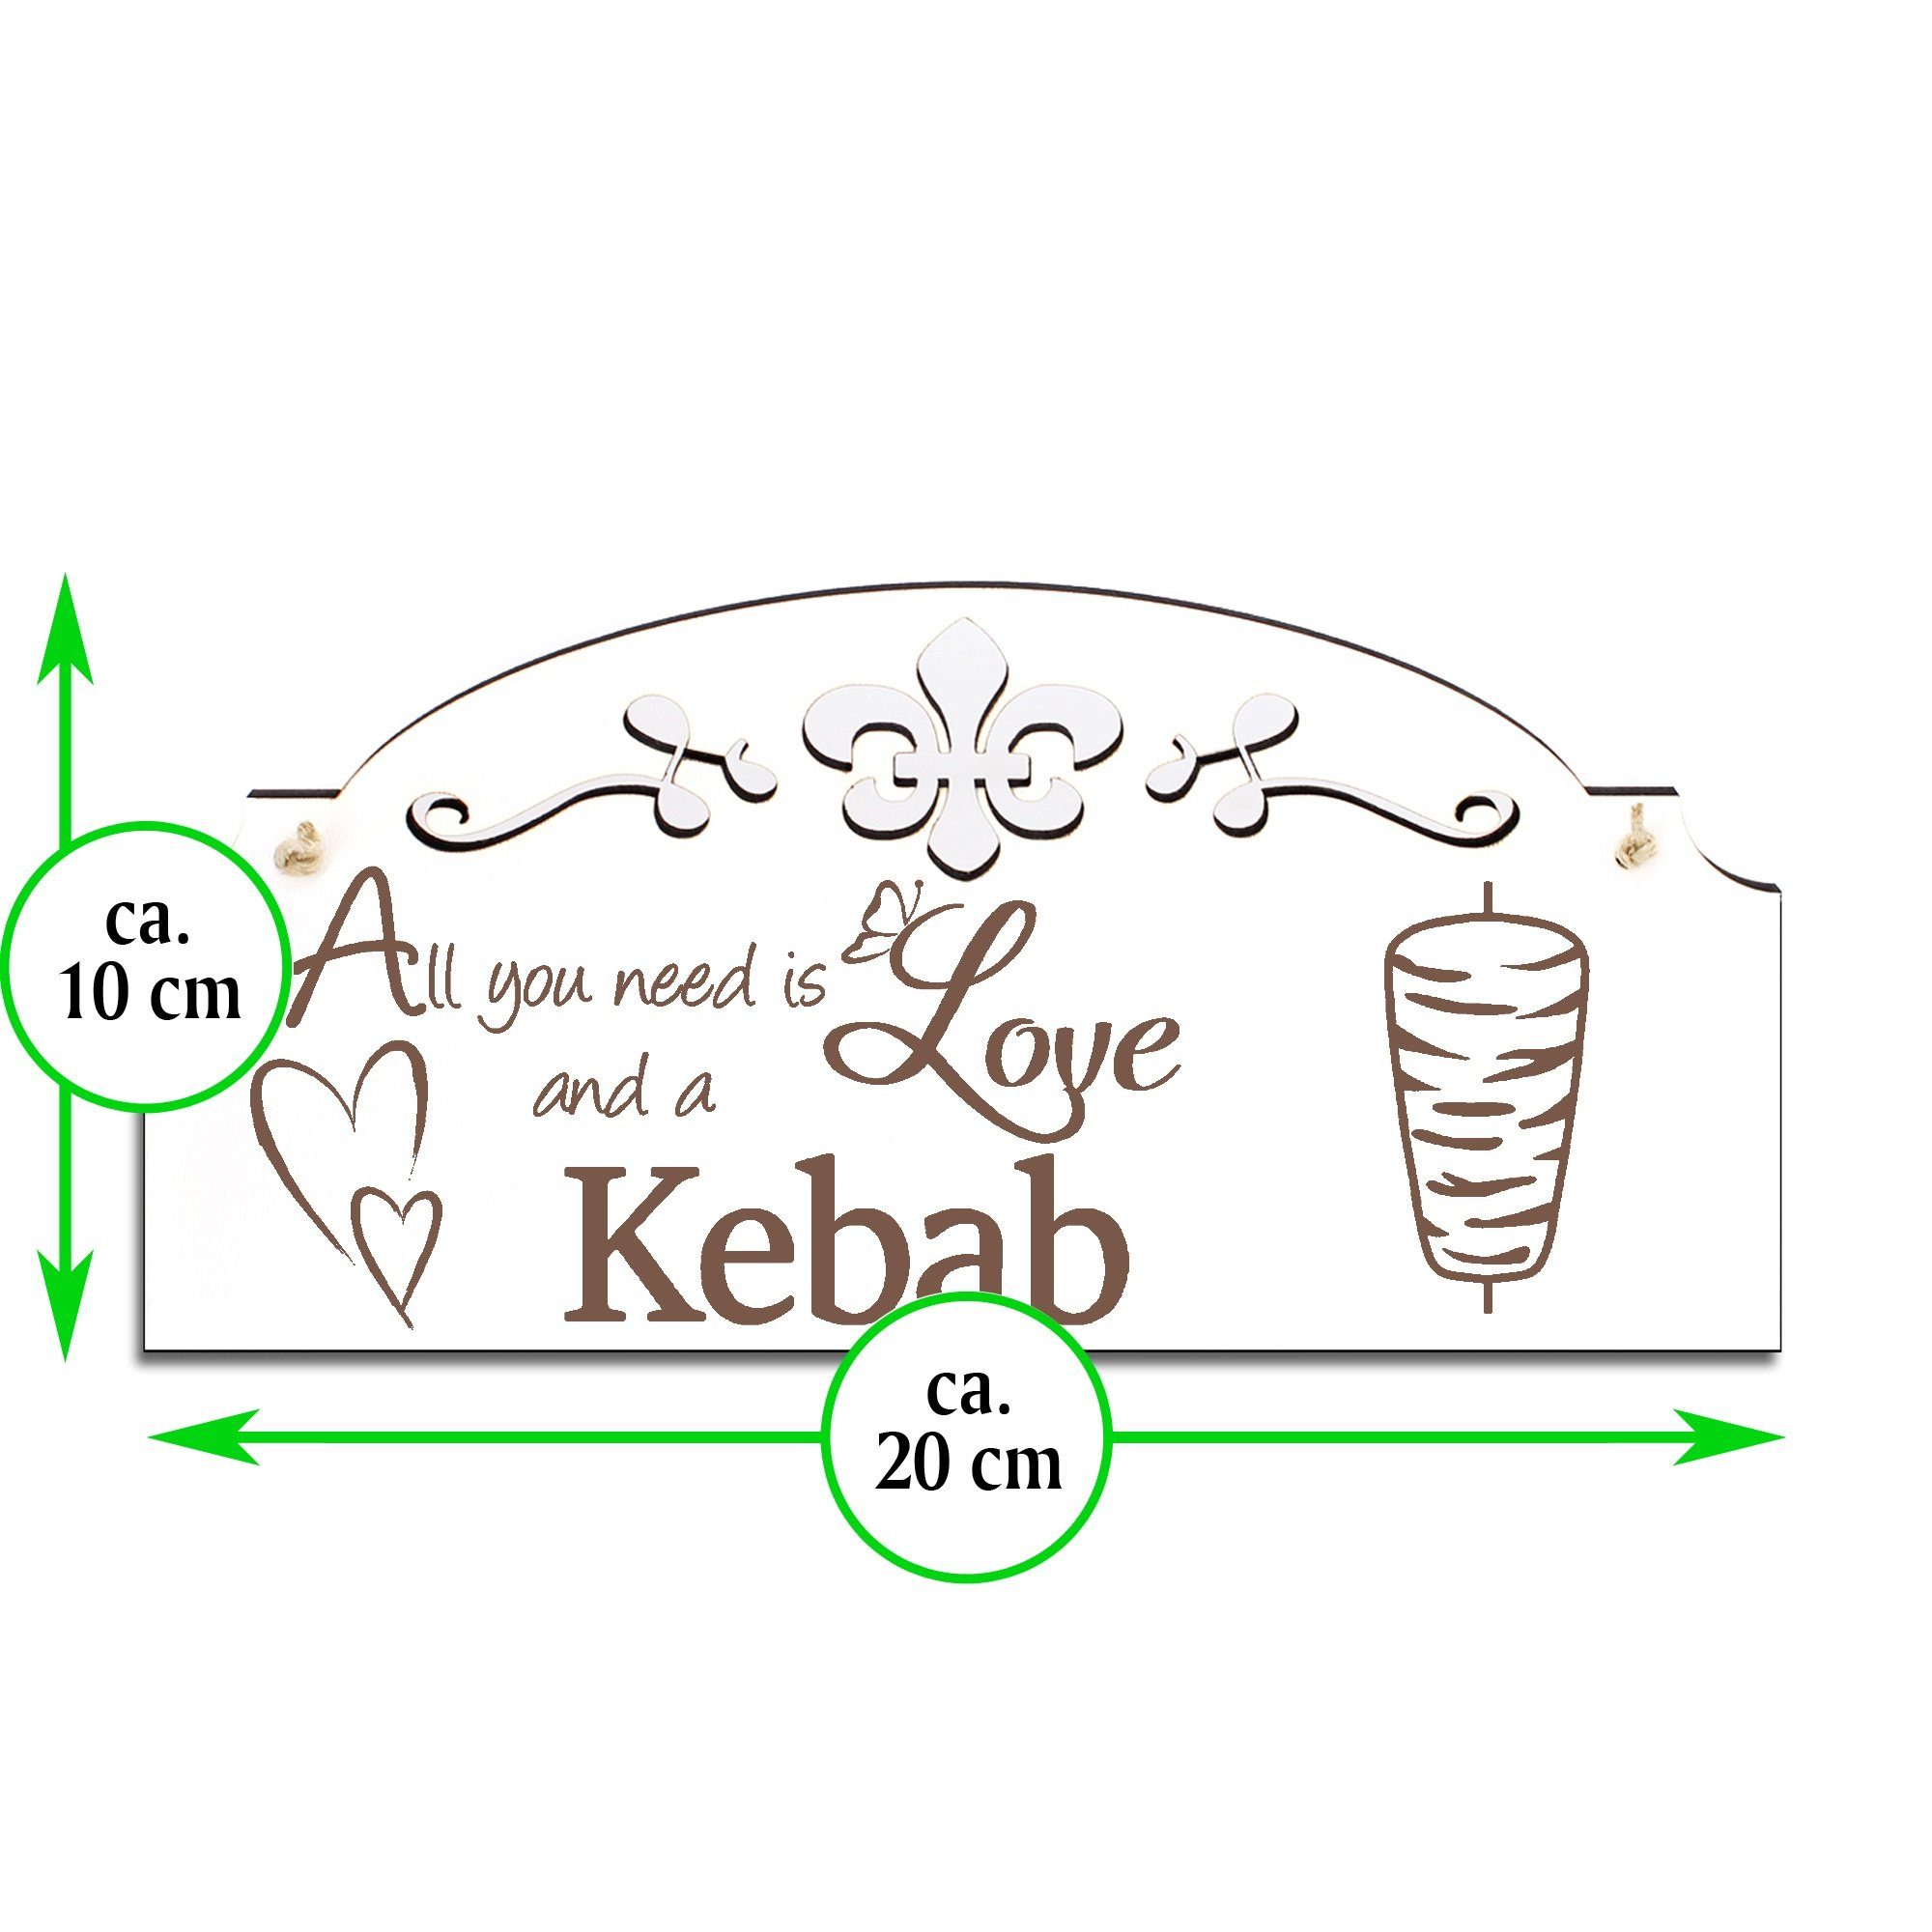 Love you is Döner 20x10cm Hängedekoration Kebab need Dekolando Deko All